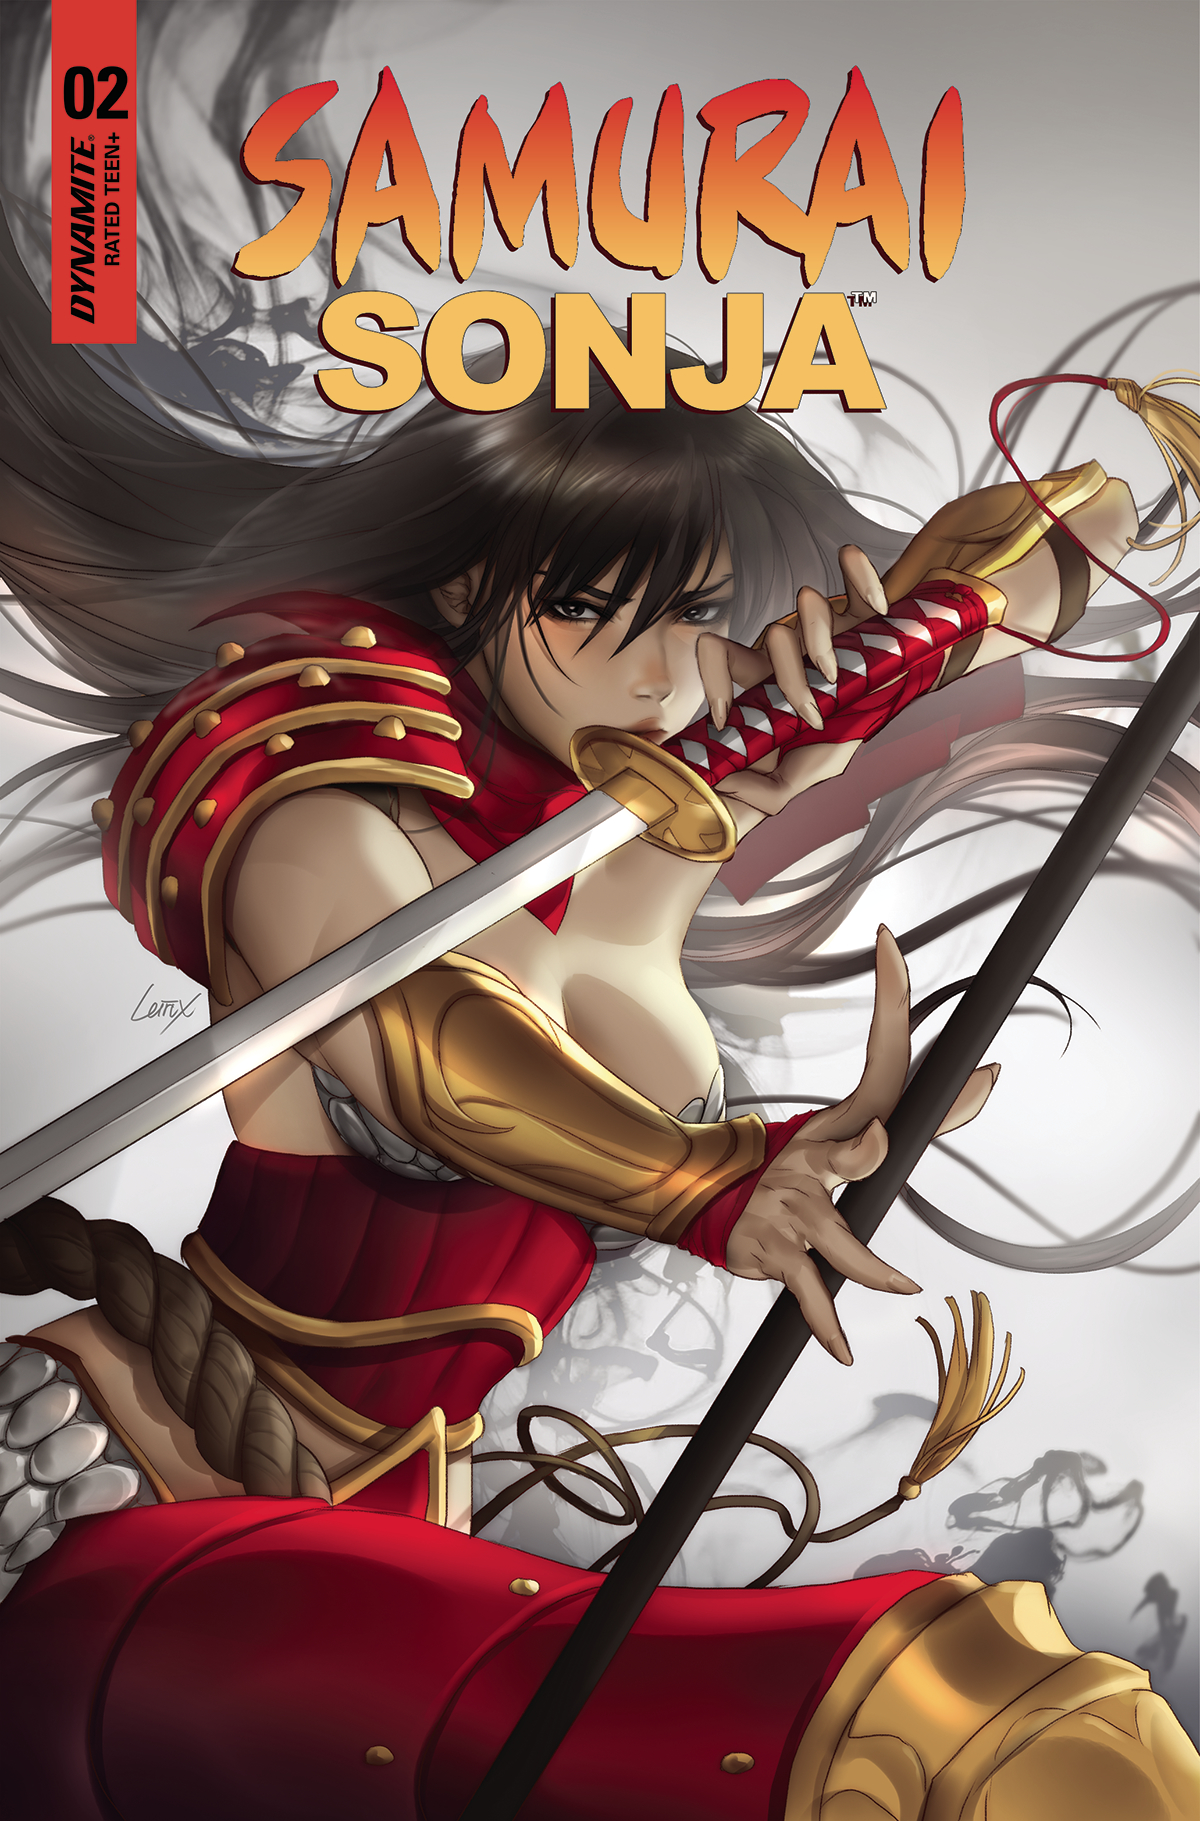 Samurai Sonja #2 Cover B Leirix